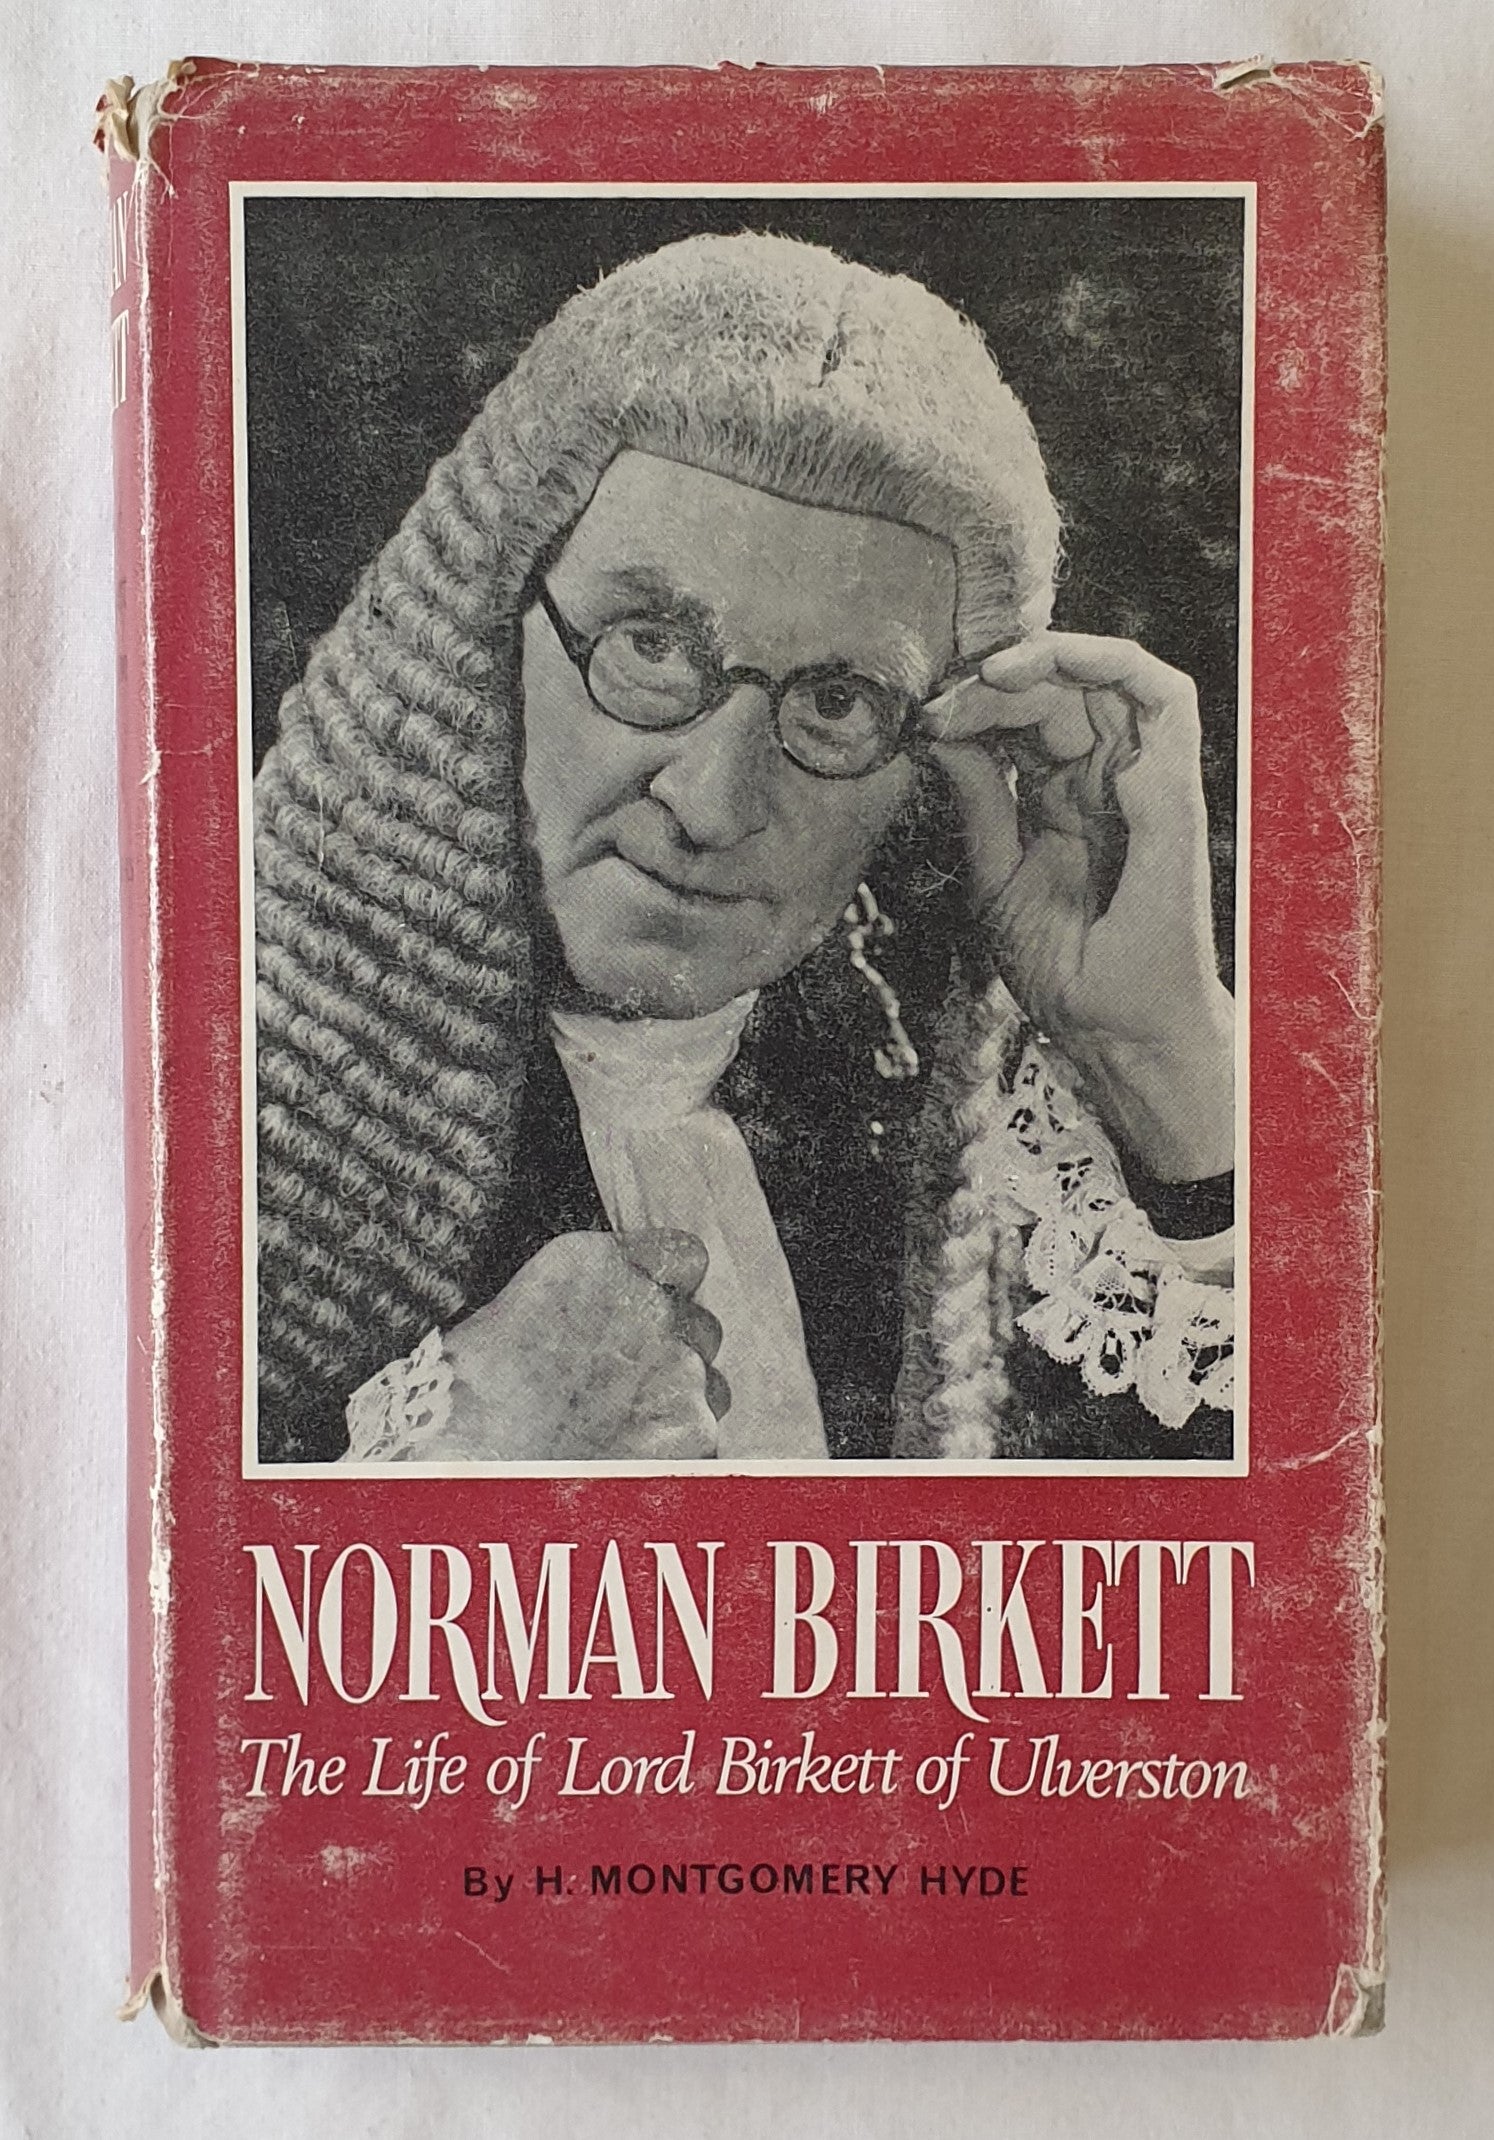 Norman Birkett by H. Montgomery Hyde